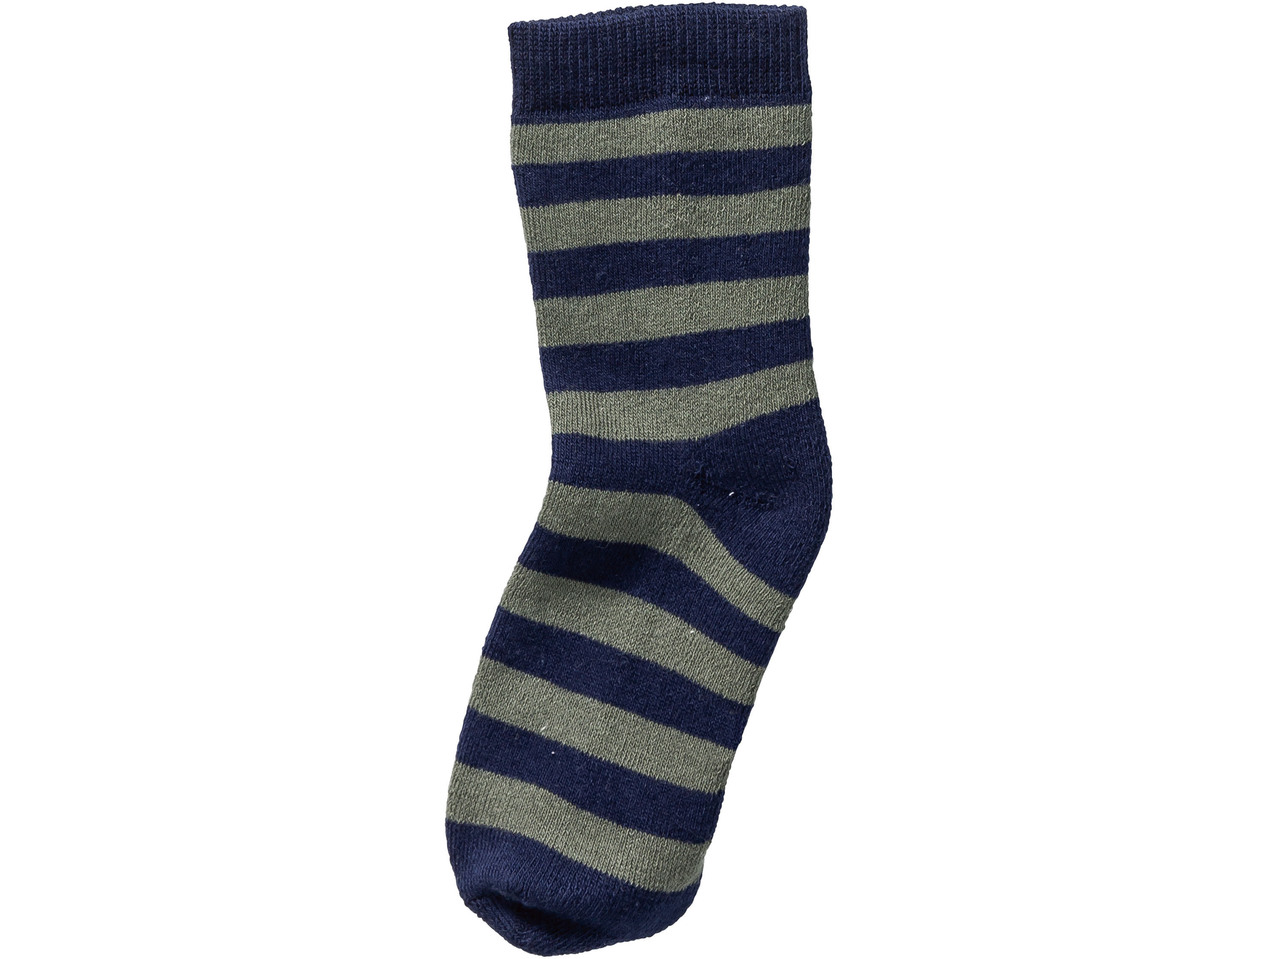 Boys' Socks, 5 pairs